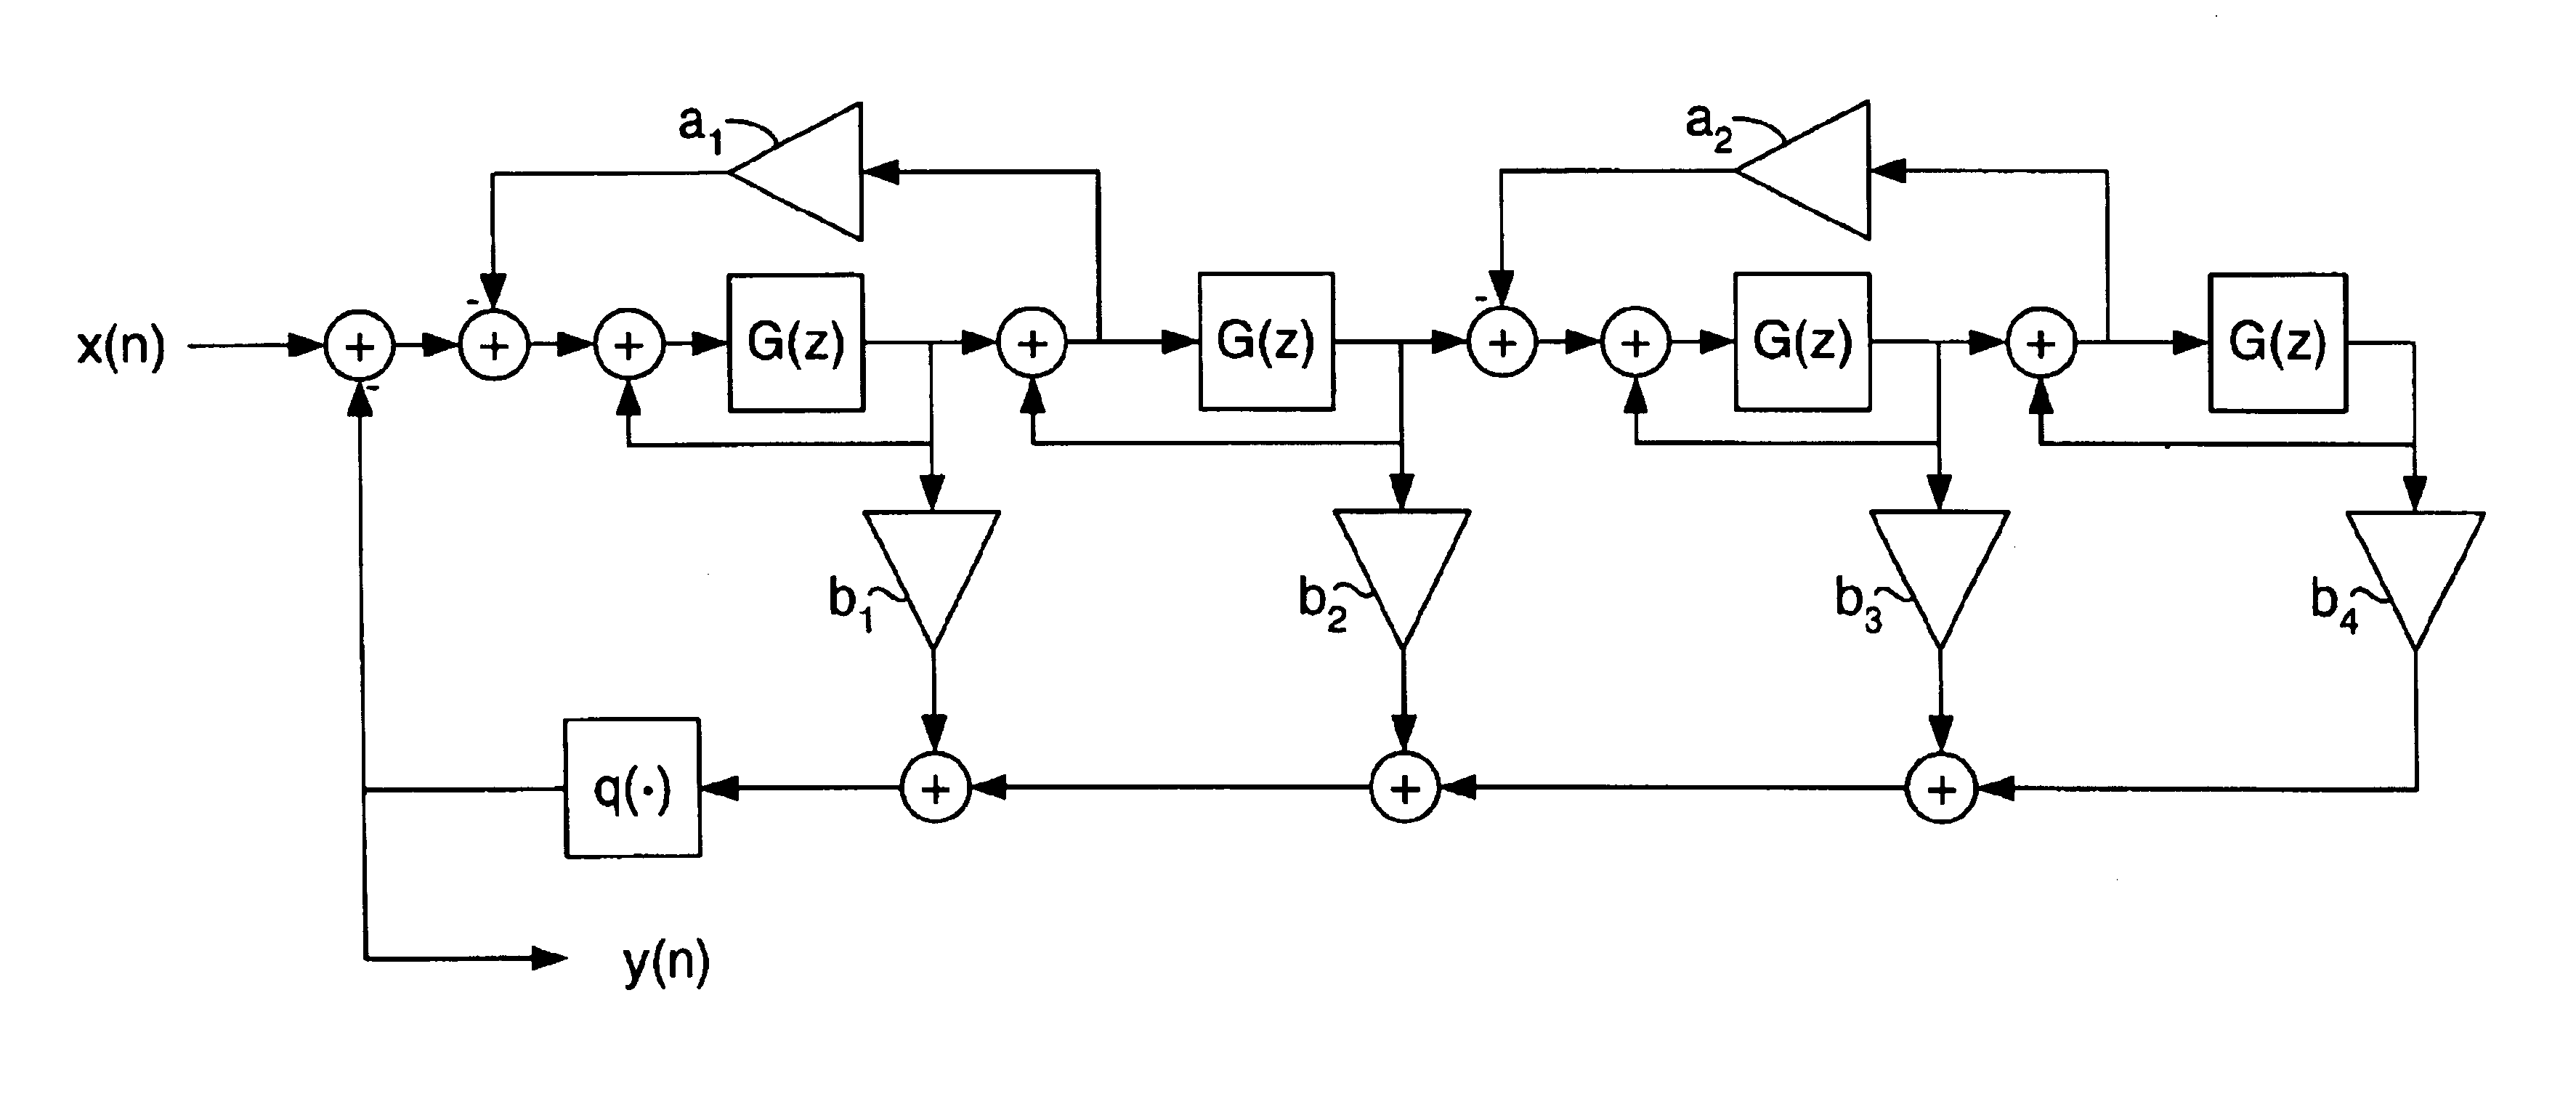 Tunable narrow-band filter including sigma-delta modulator